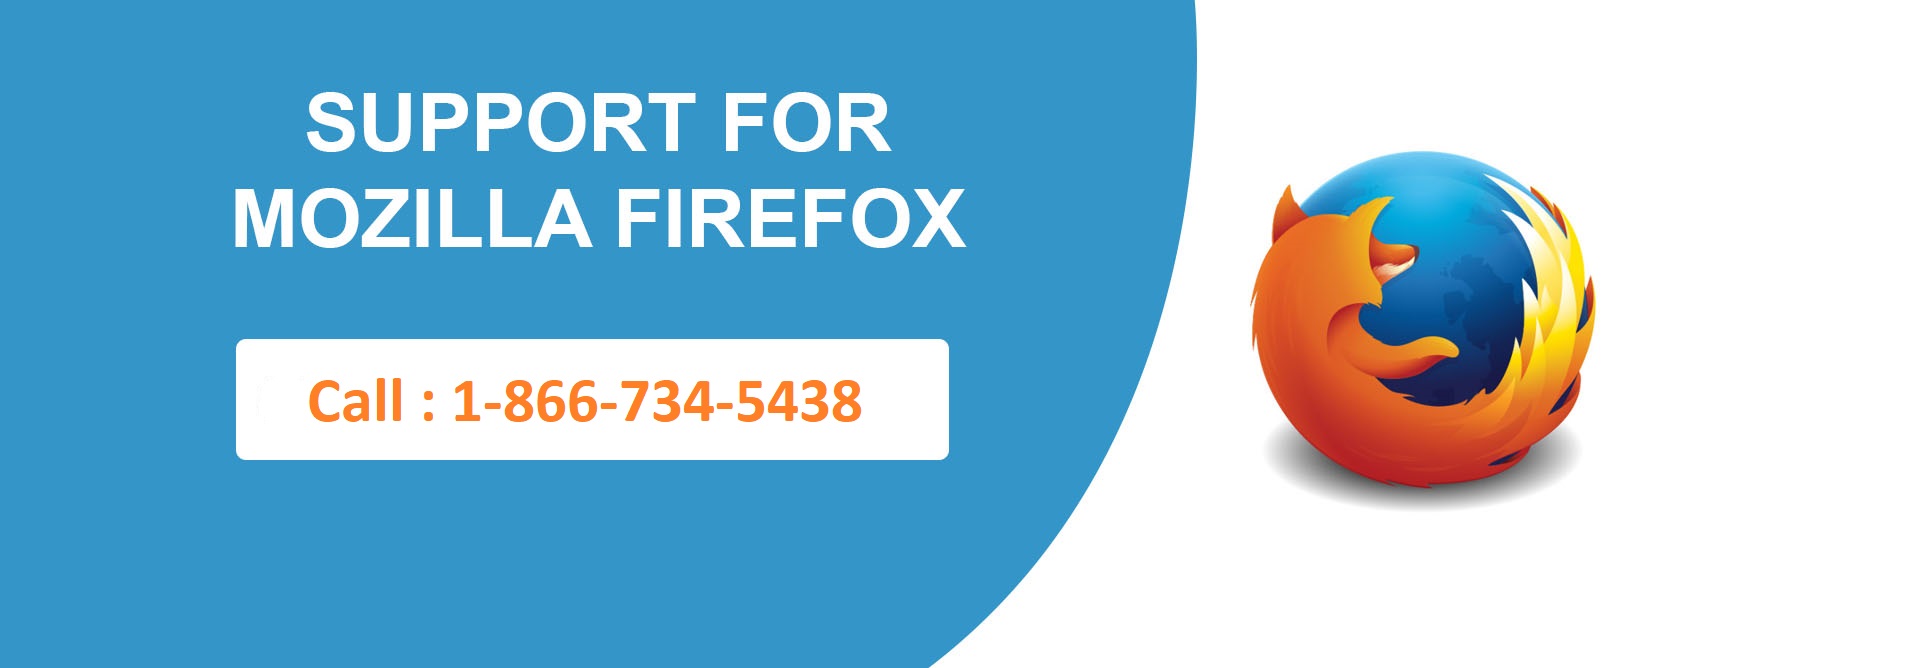 Самолет Firefox. Mozilla support